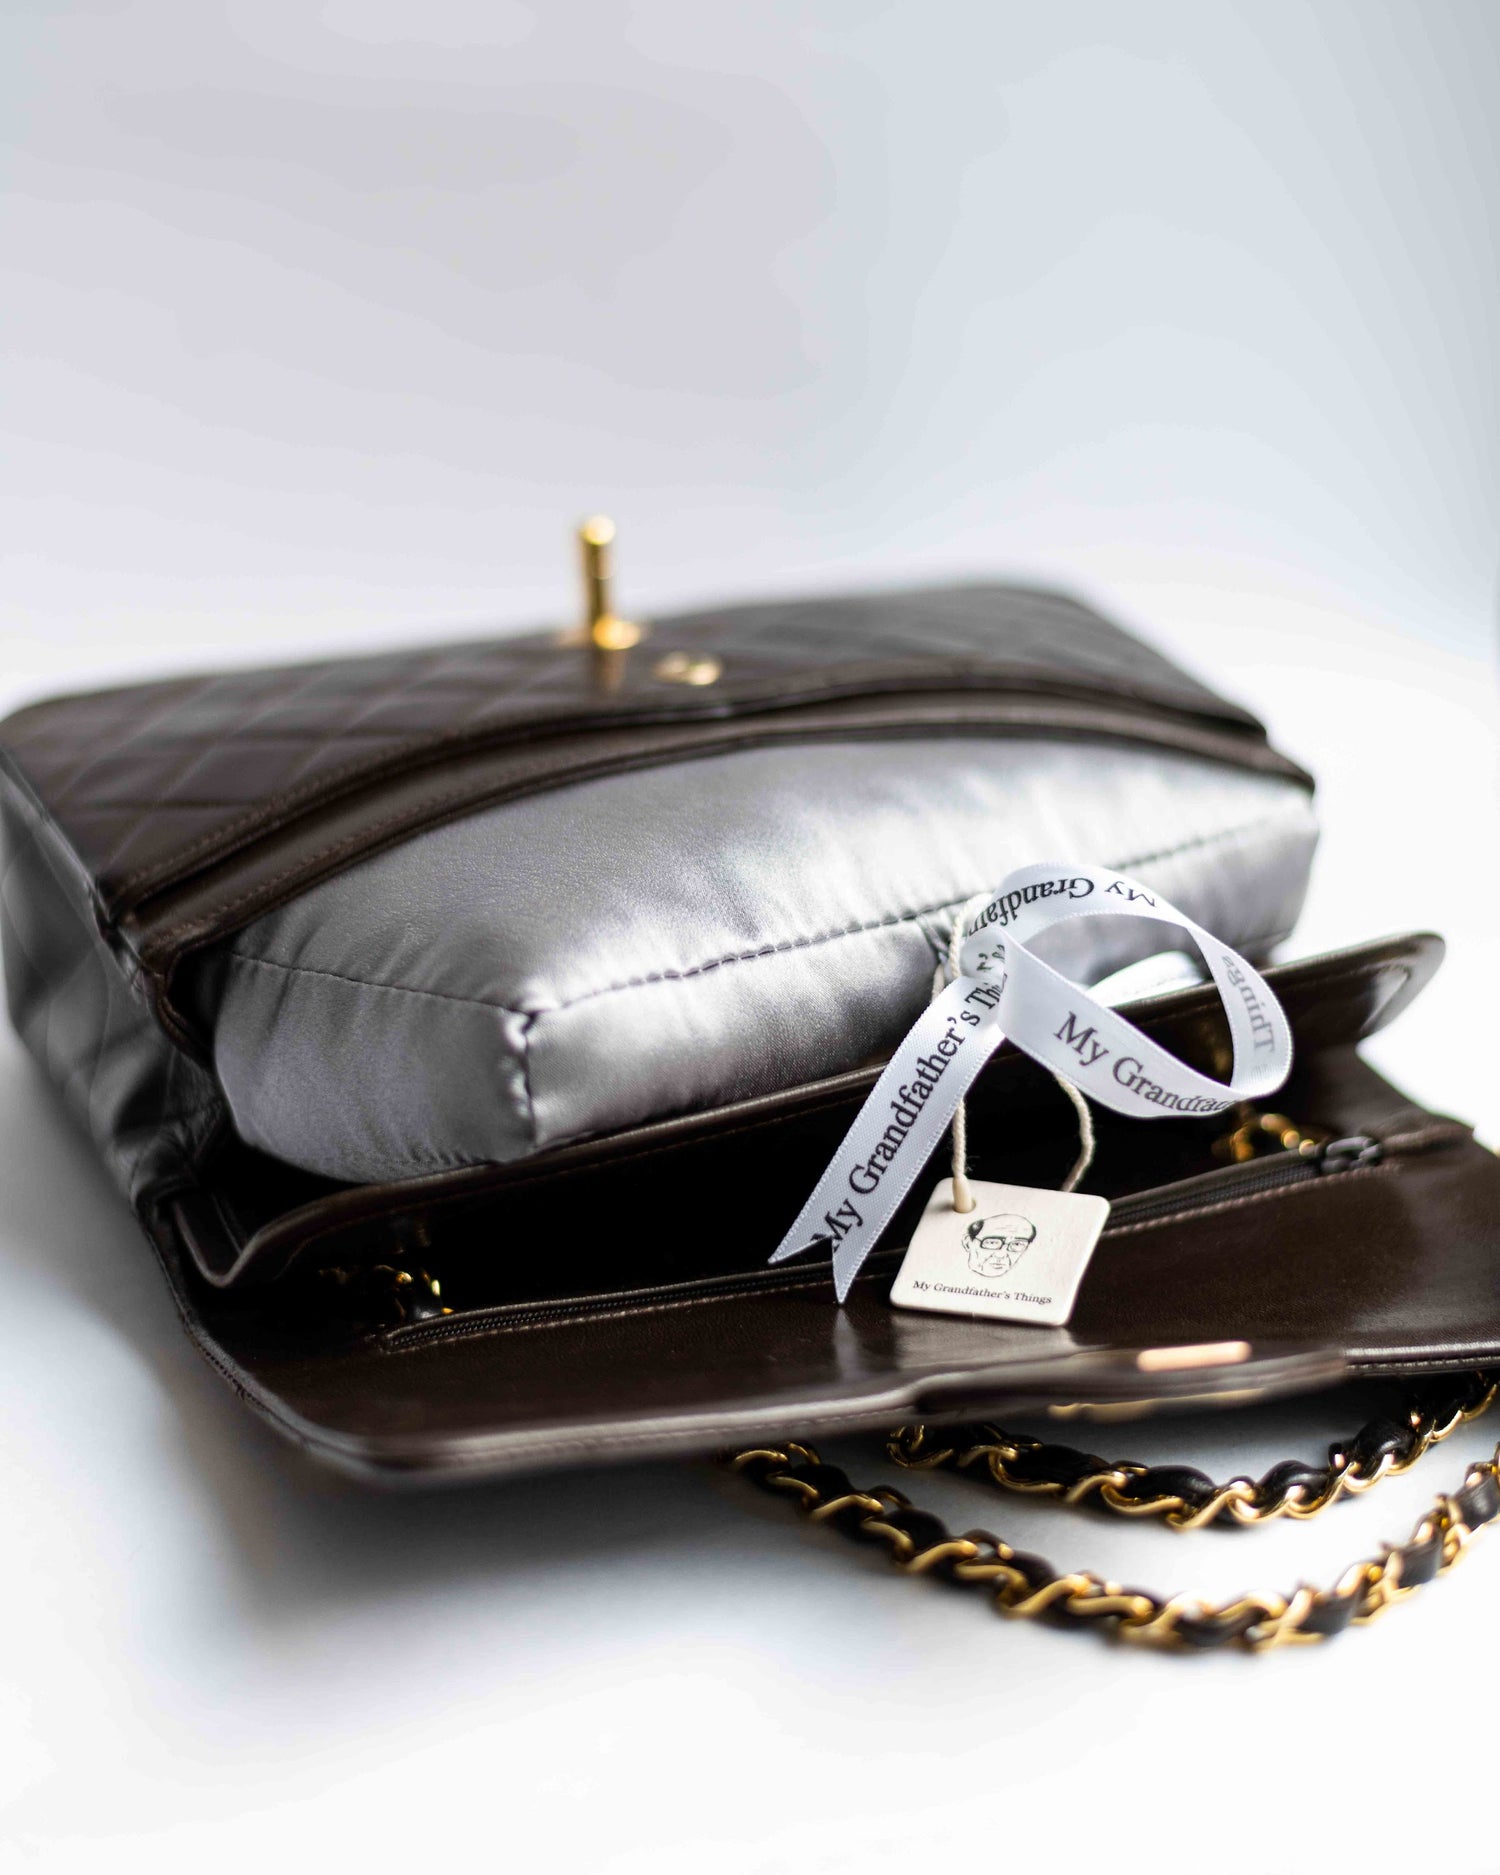 Always Believe Something Wonderful (Coco Chanel) Canvas Zip Bag